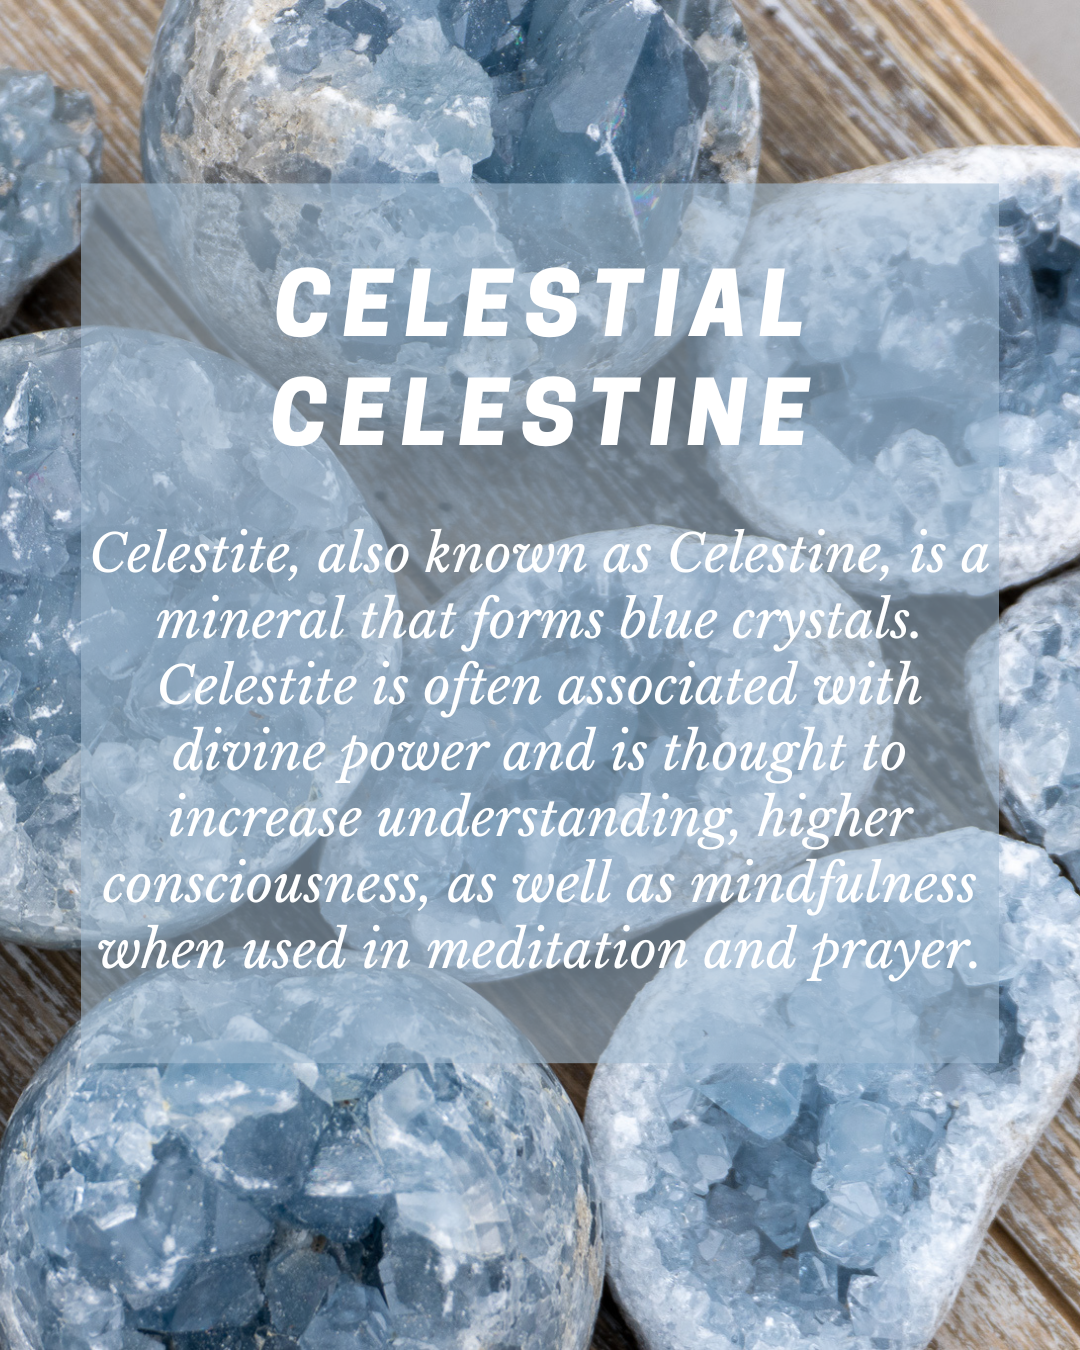 Celestial Celestine